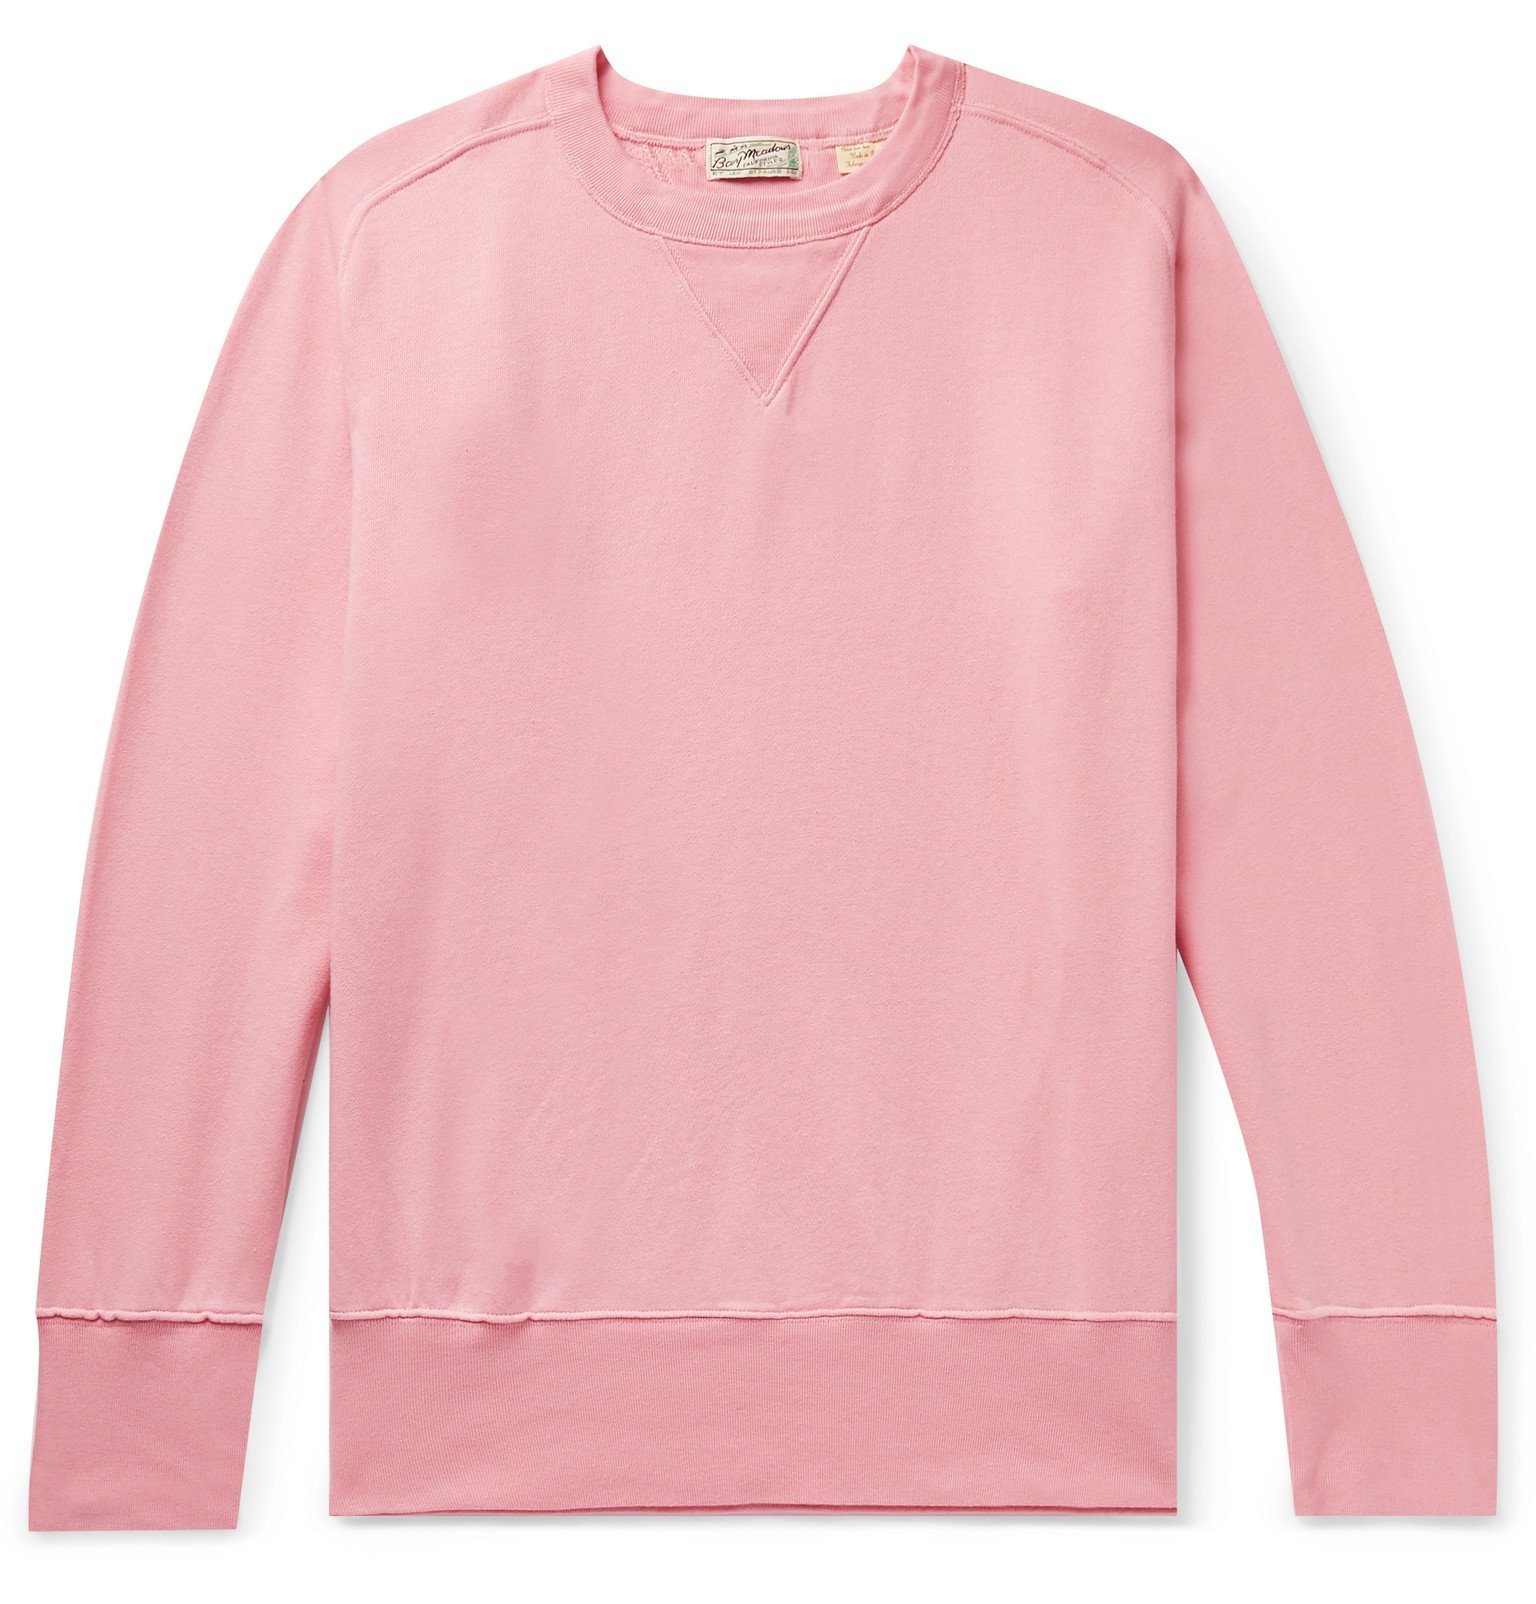 levi's sweatshirt pink